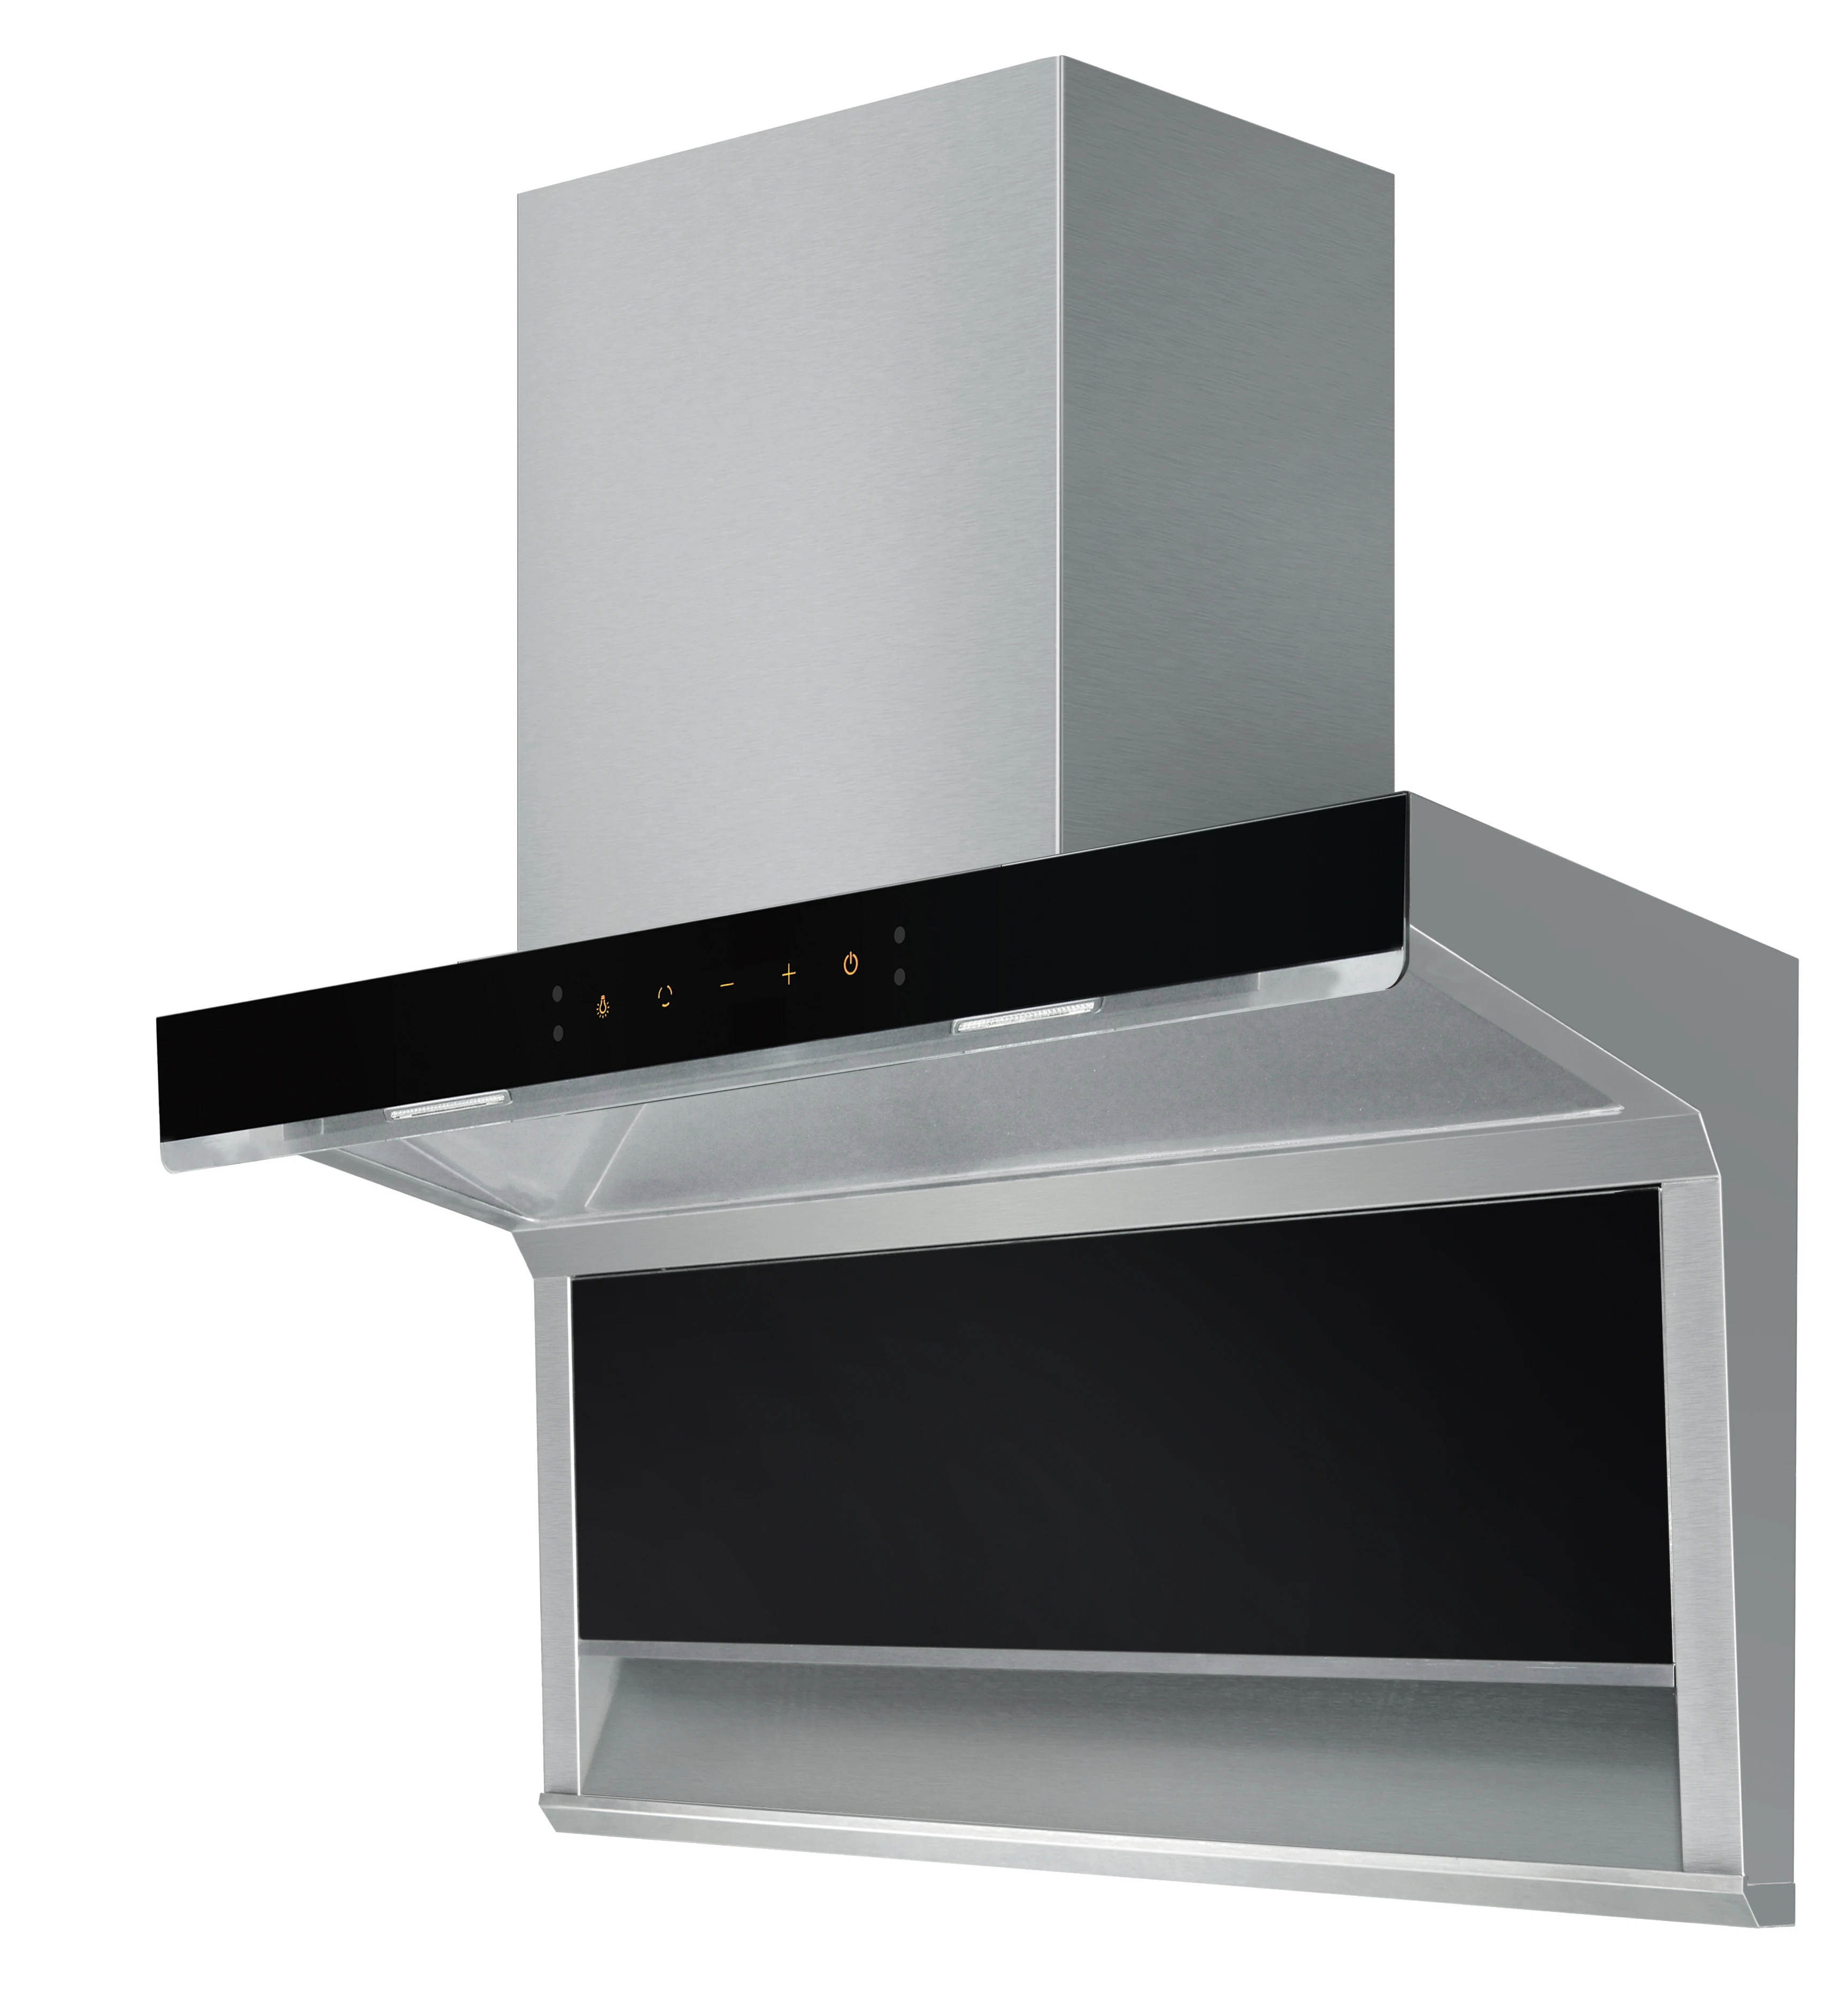 Longbank LB- L6-3 Range Hood Glass Kitchen Hood Kitchen Appliance island range hood